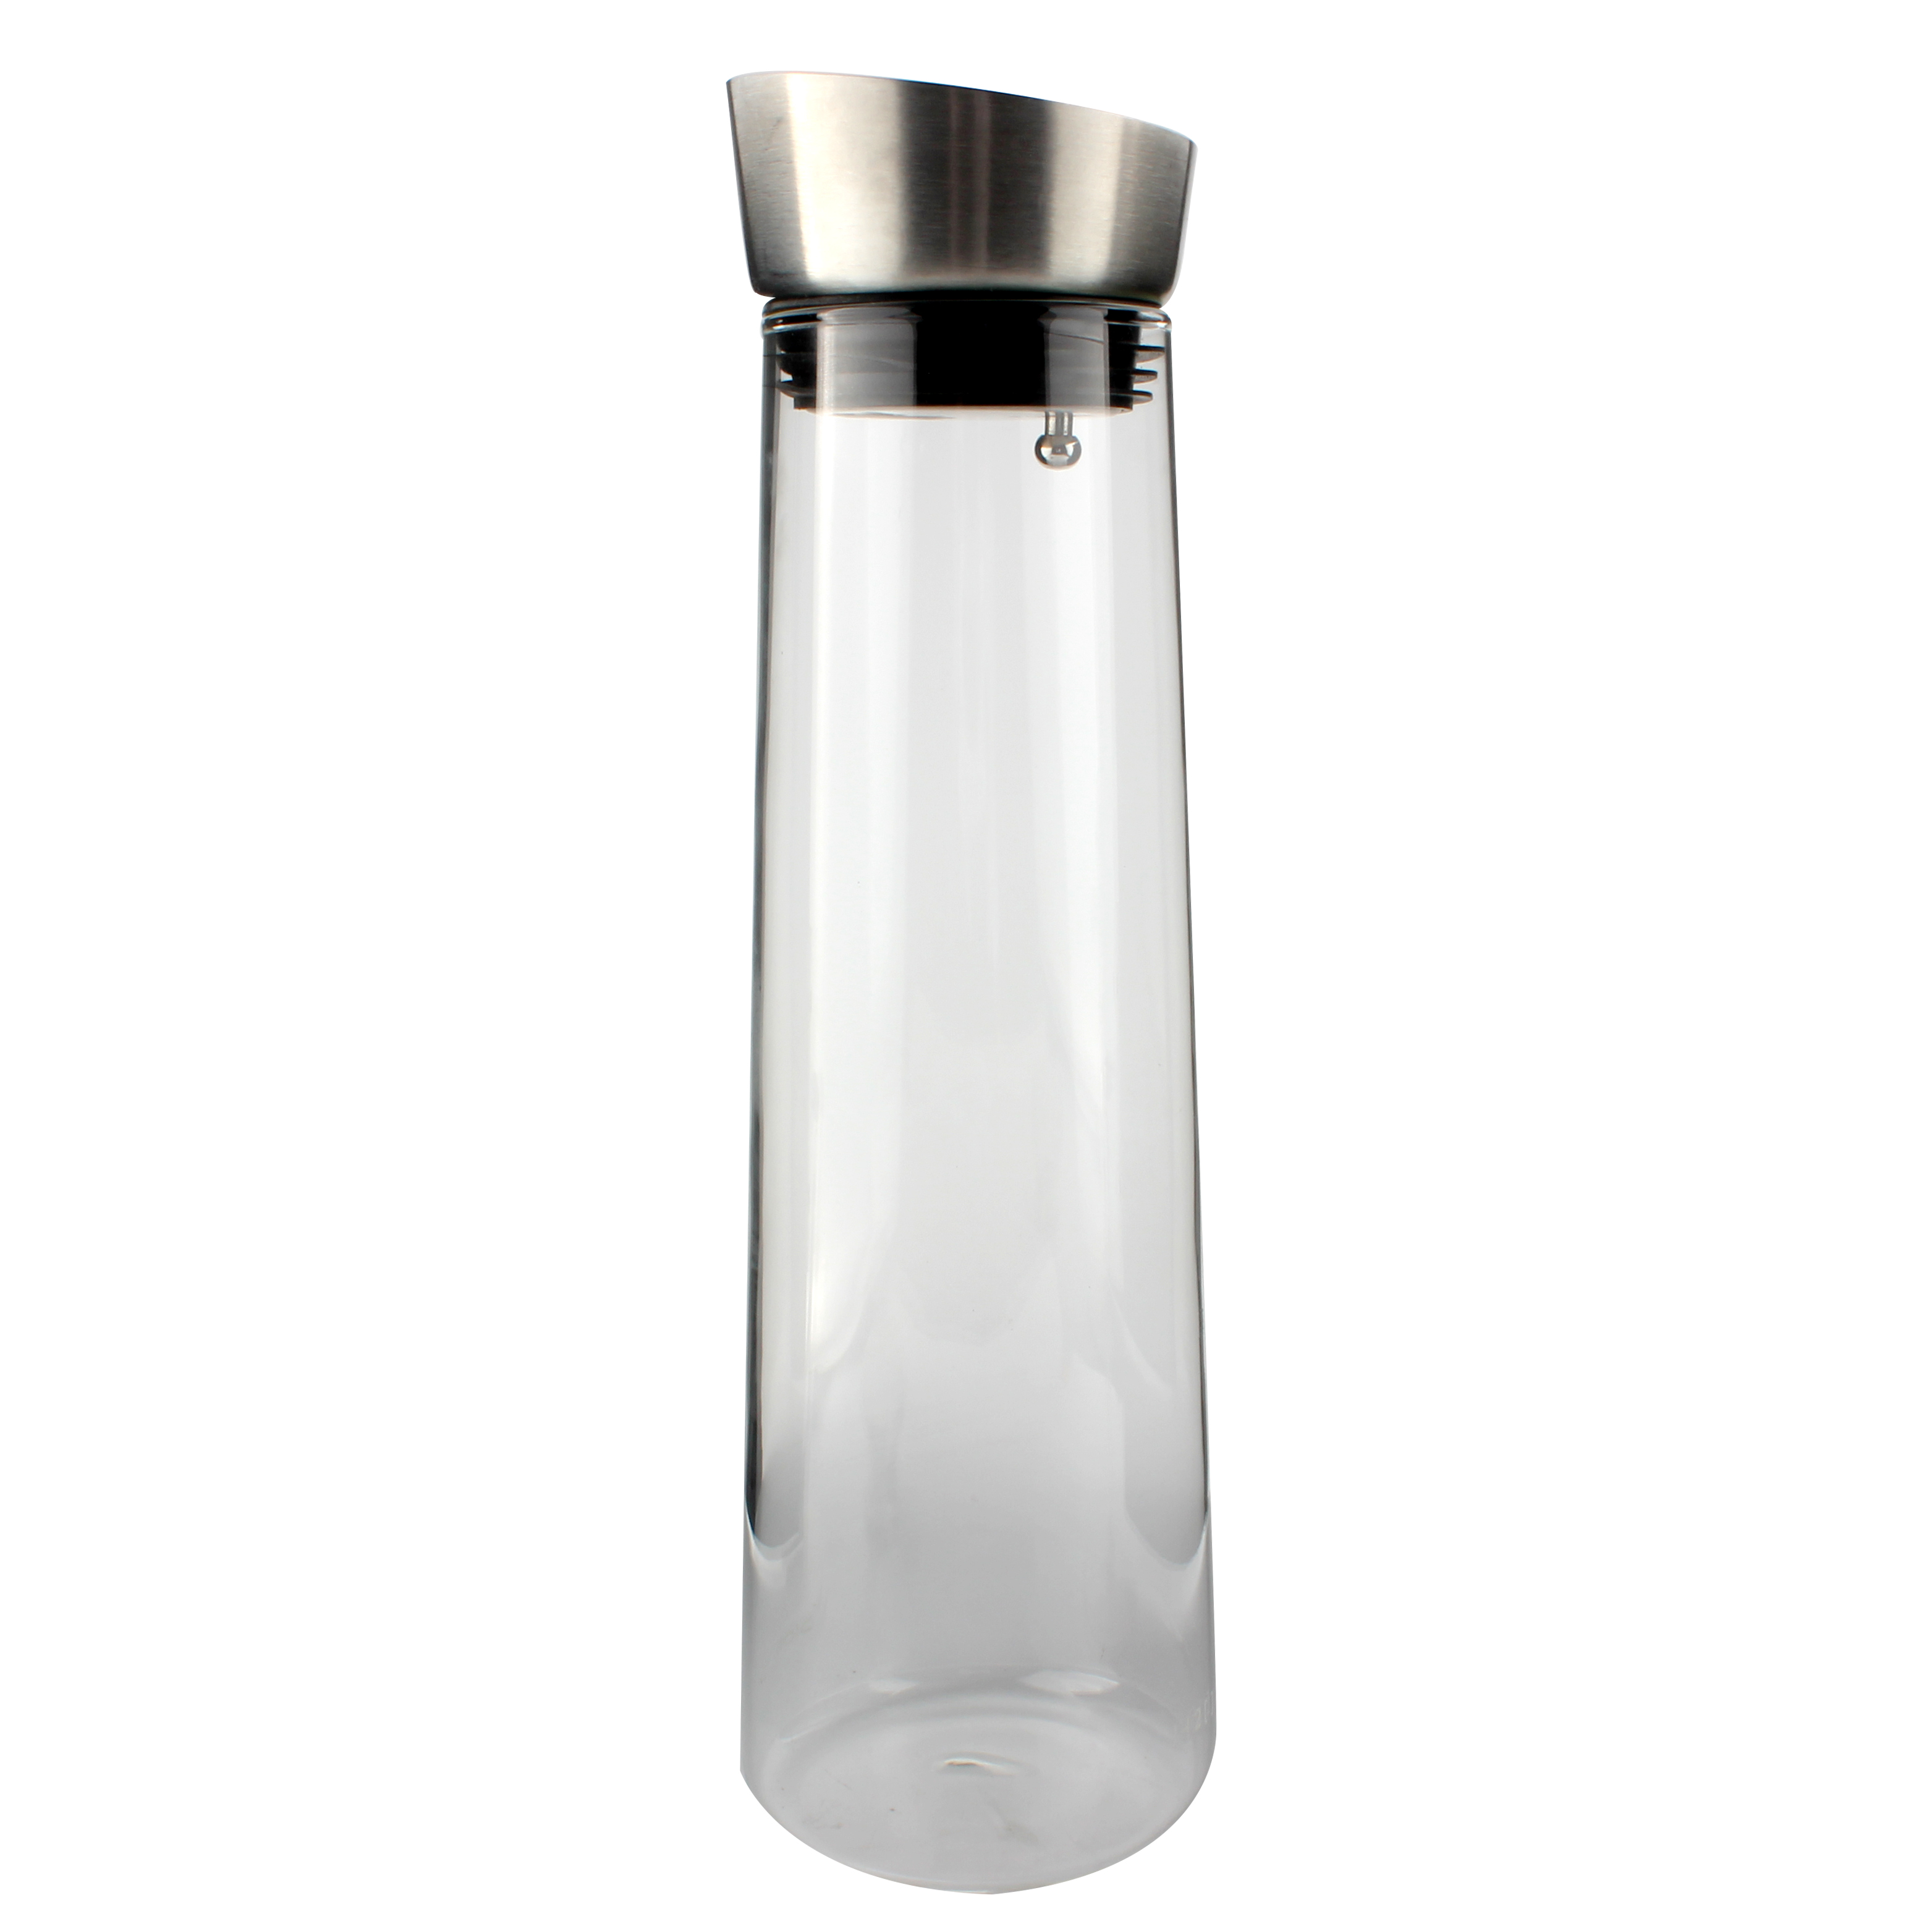 Daily Use Straight Sided Glass Jars Kitchen Jars Storage Drink Jar